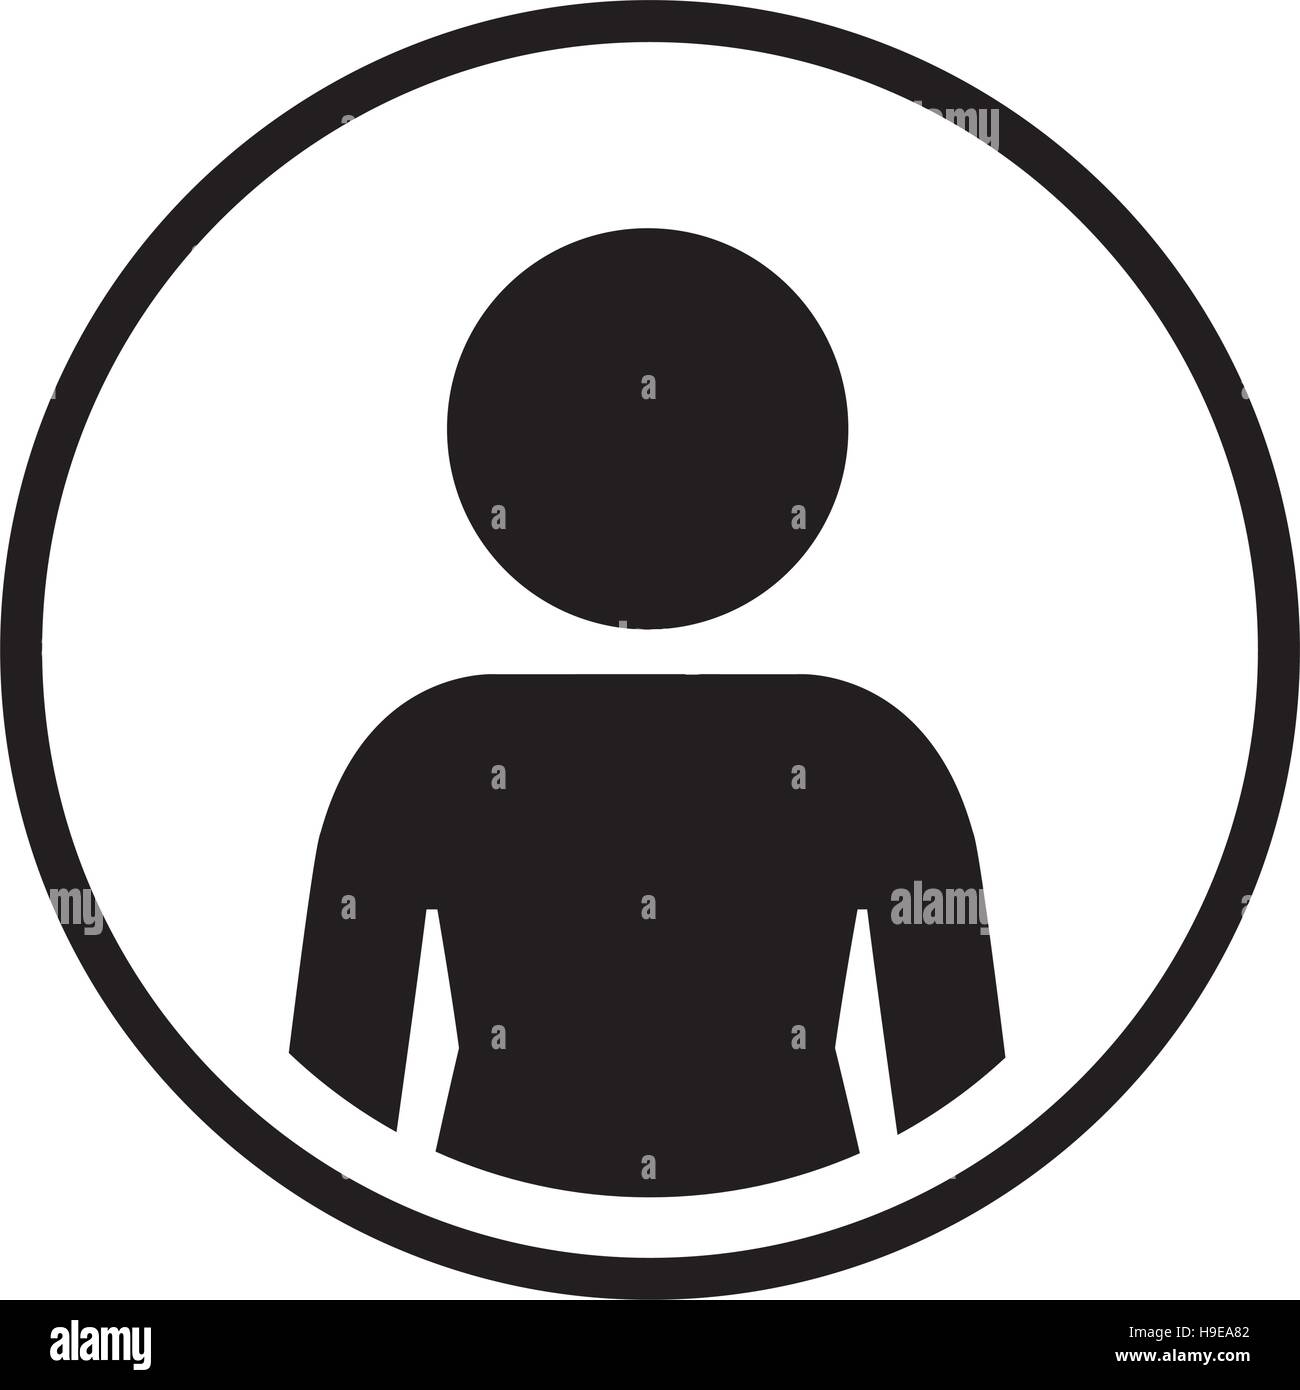 silhouette sphere of half body icon figure human vector illustration Stock Vector